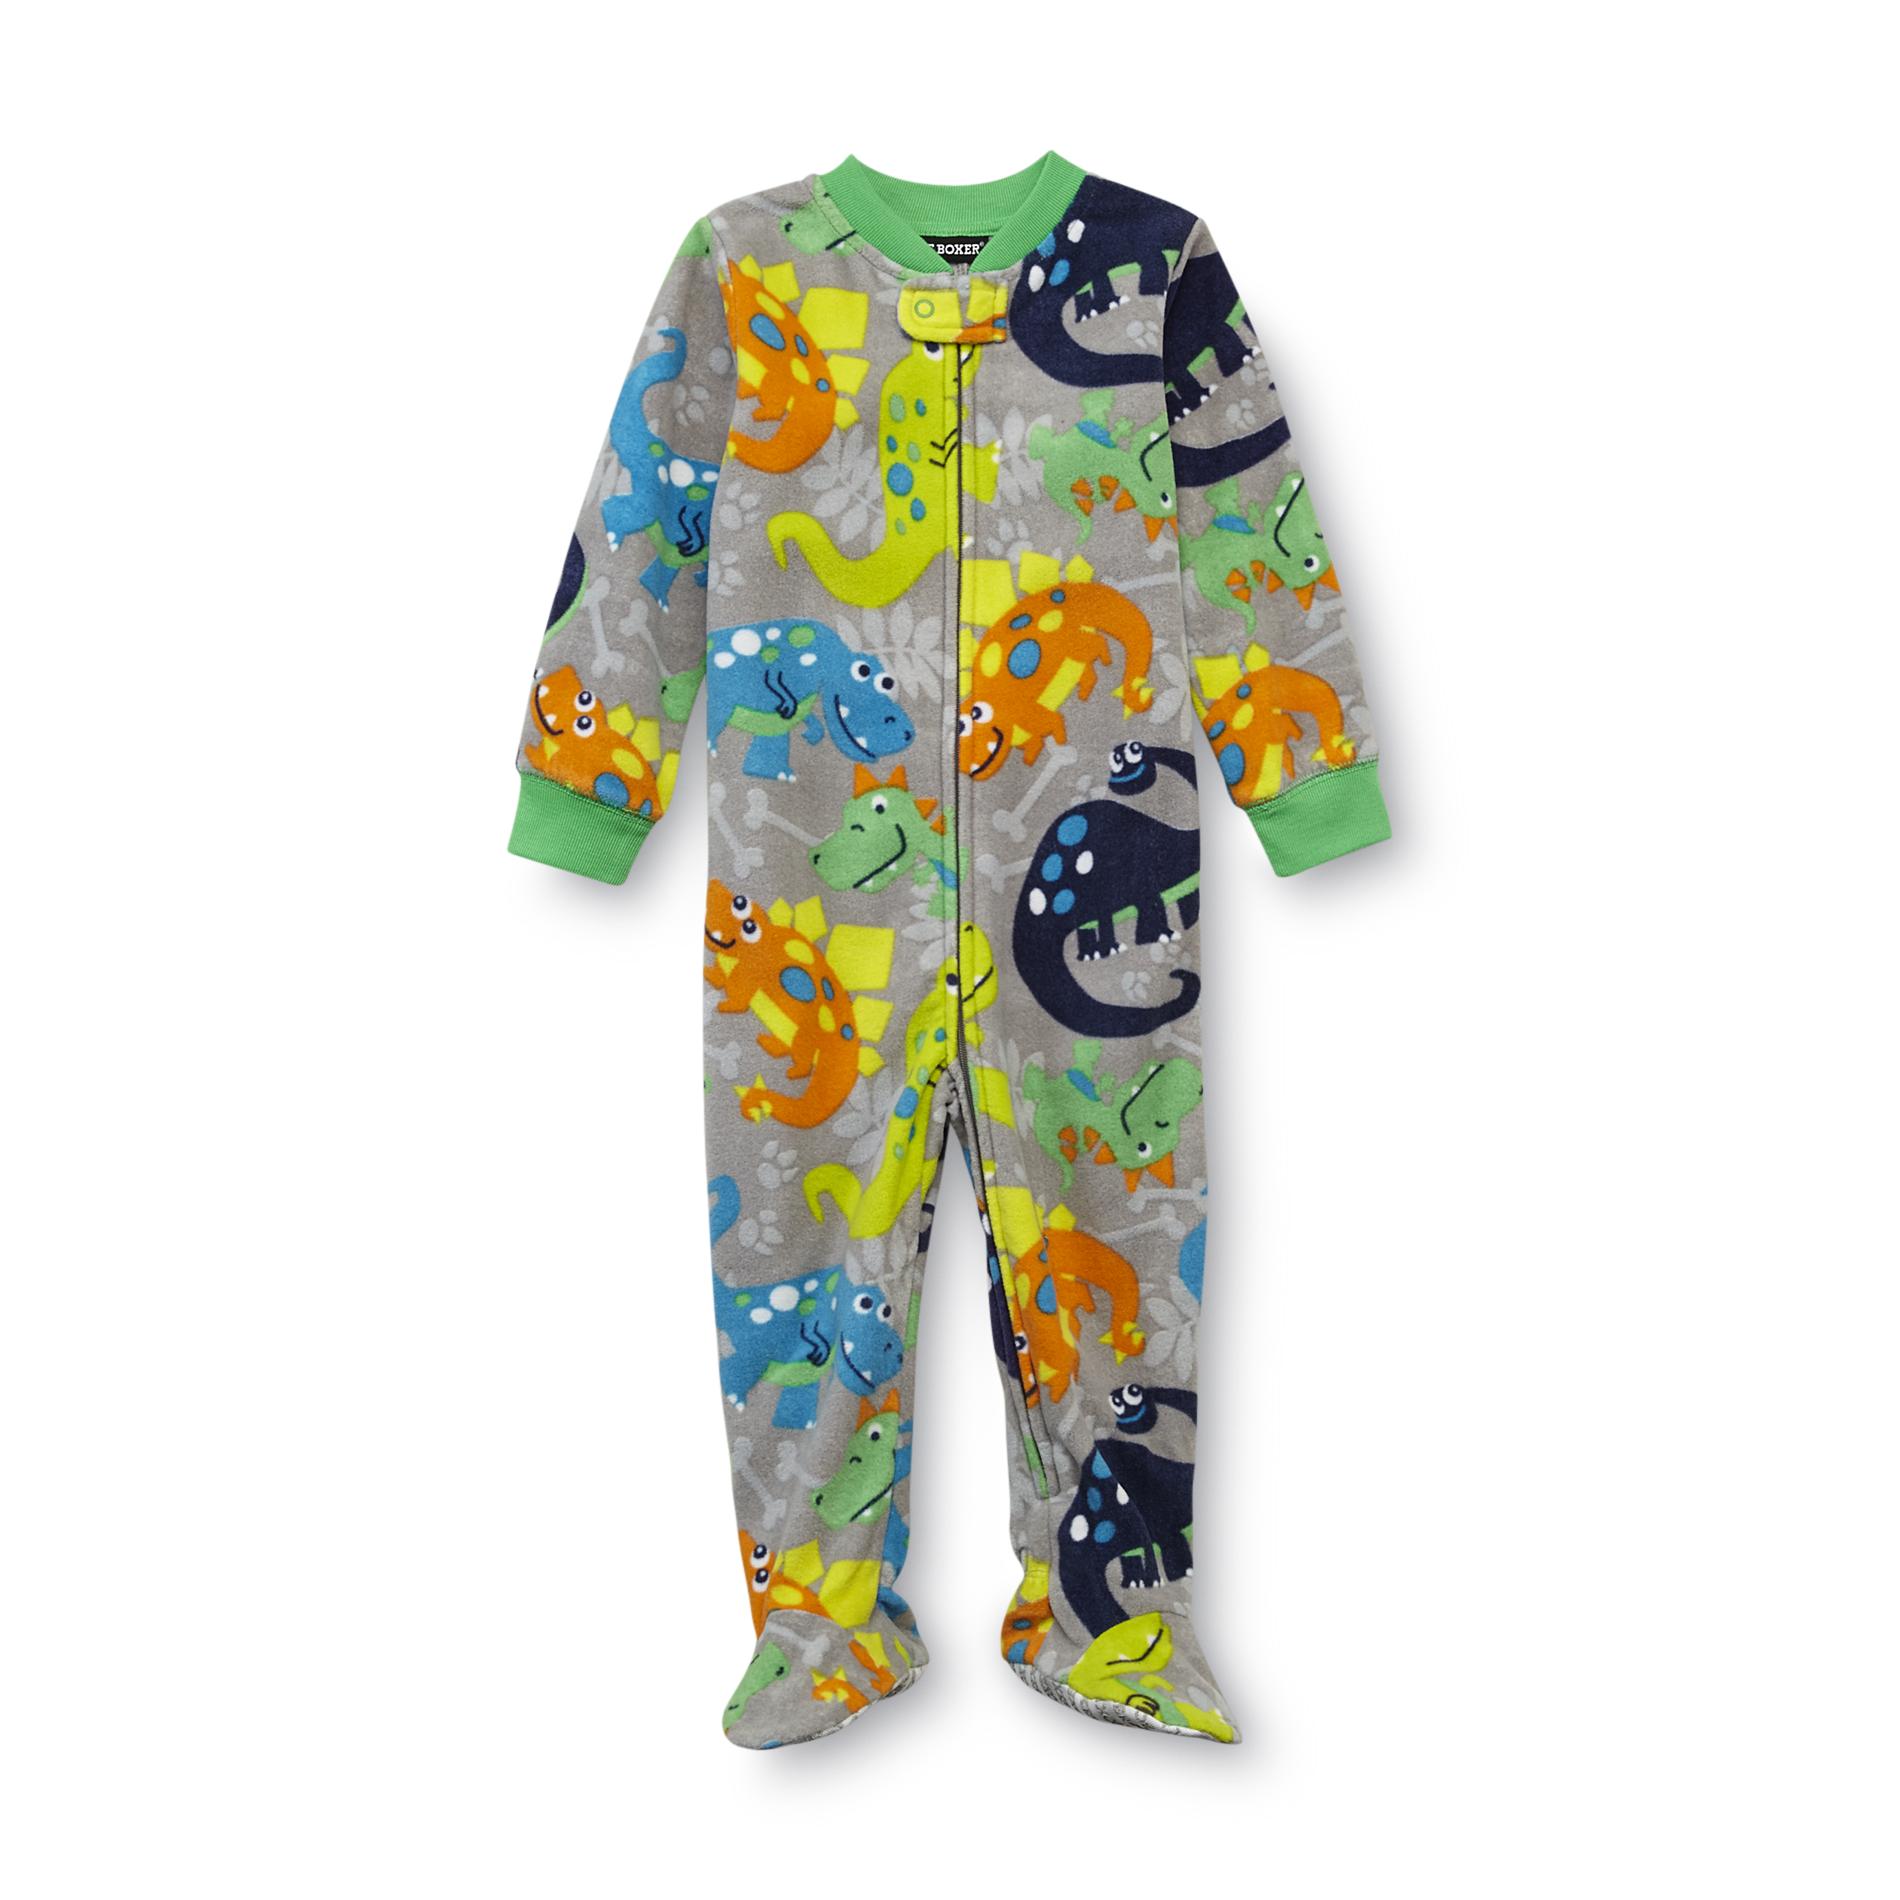 Joe Boxer Infant & Toddler Boy's Footed Sleeper Pajamas - Dinosaurs